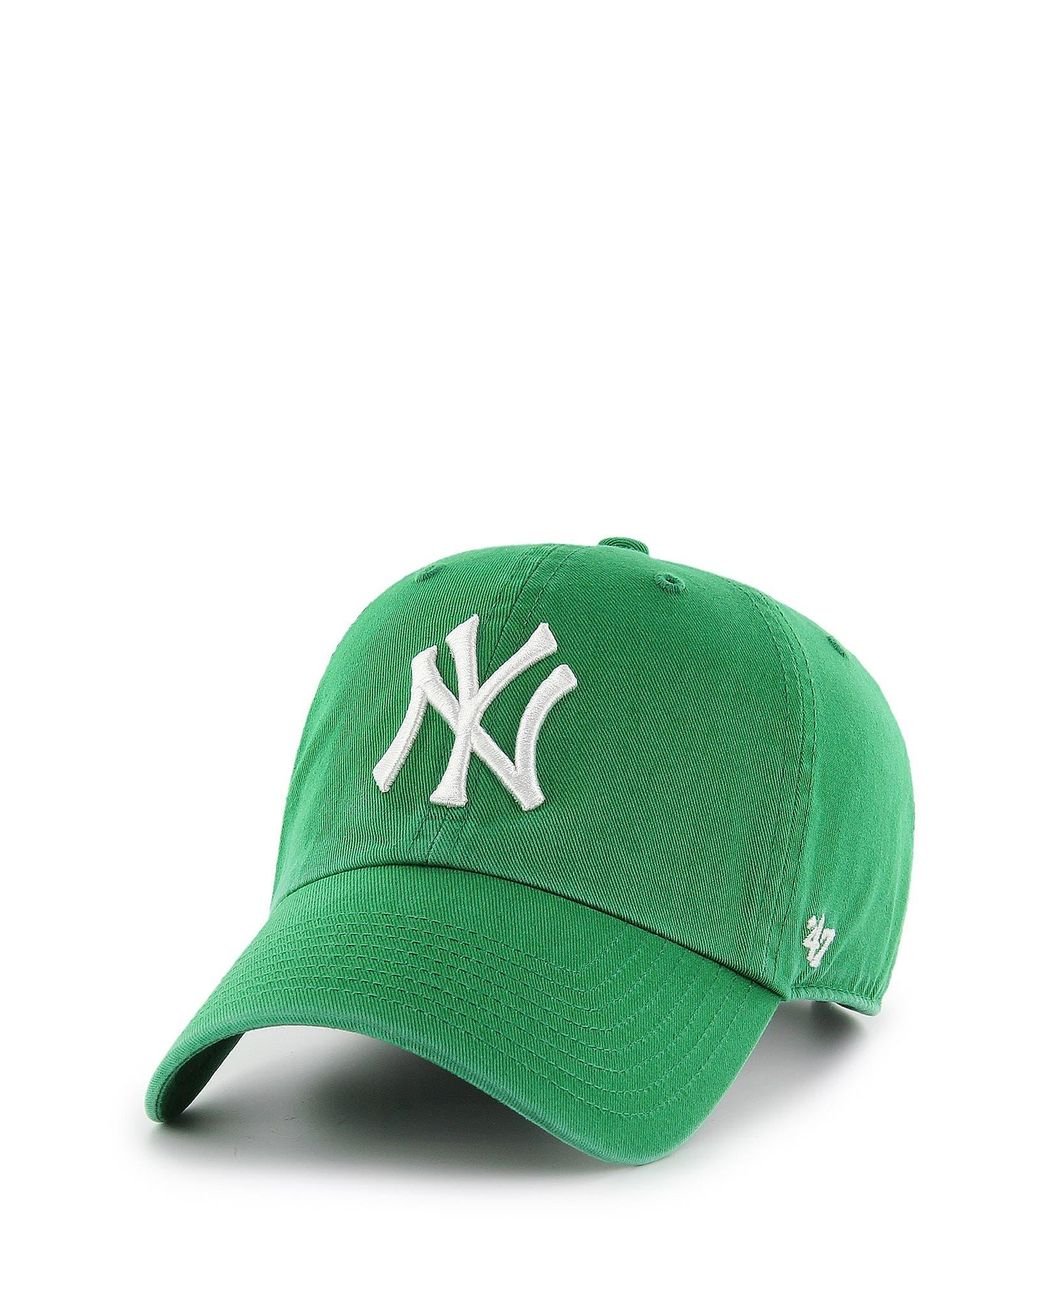 mlb cap green